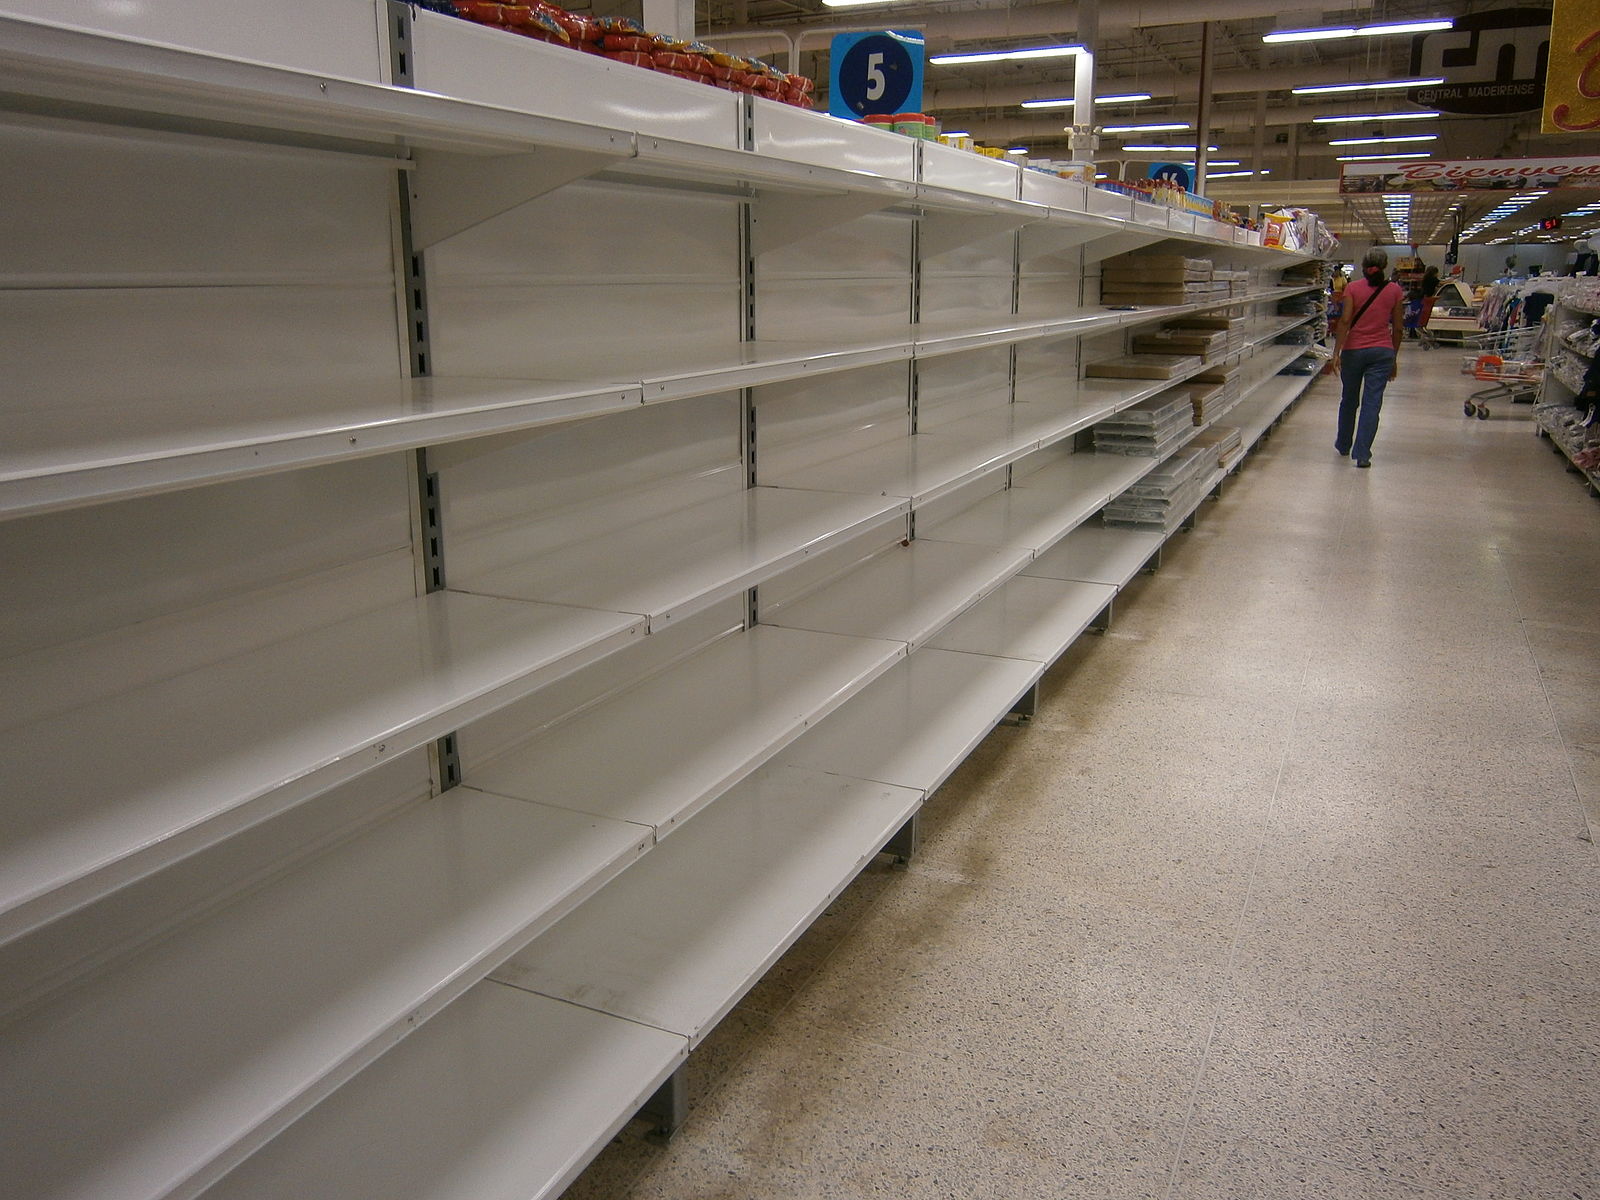 empty_supermarket_shelves